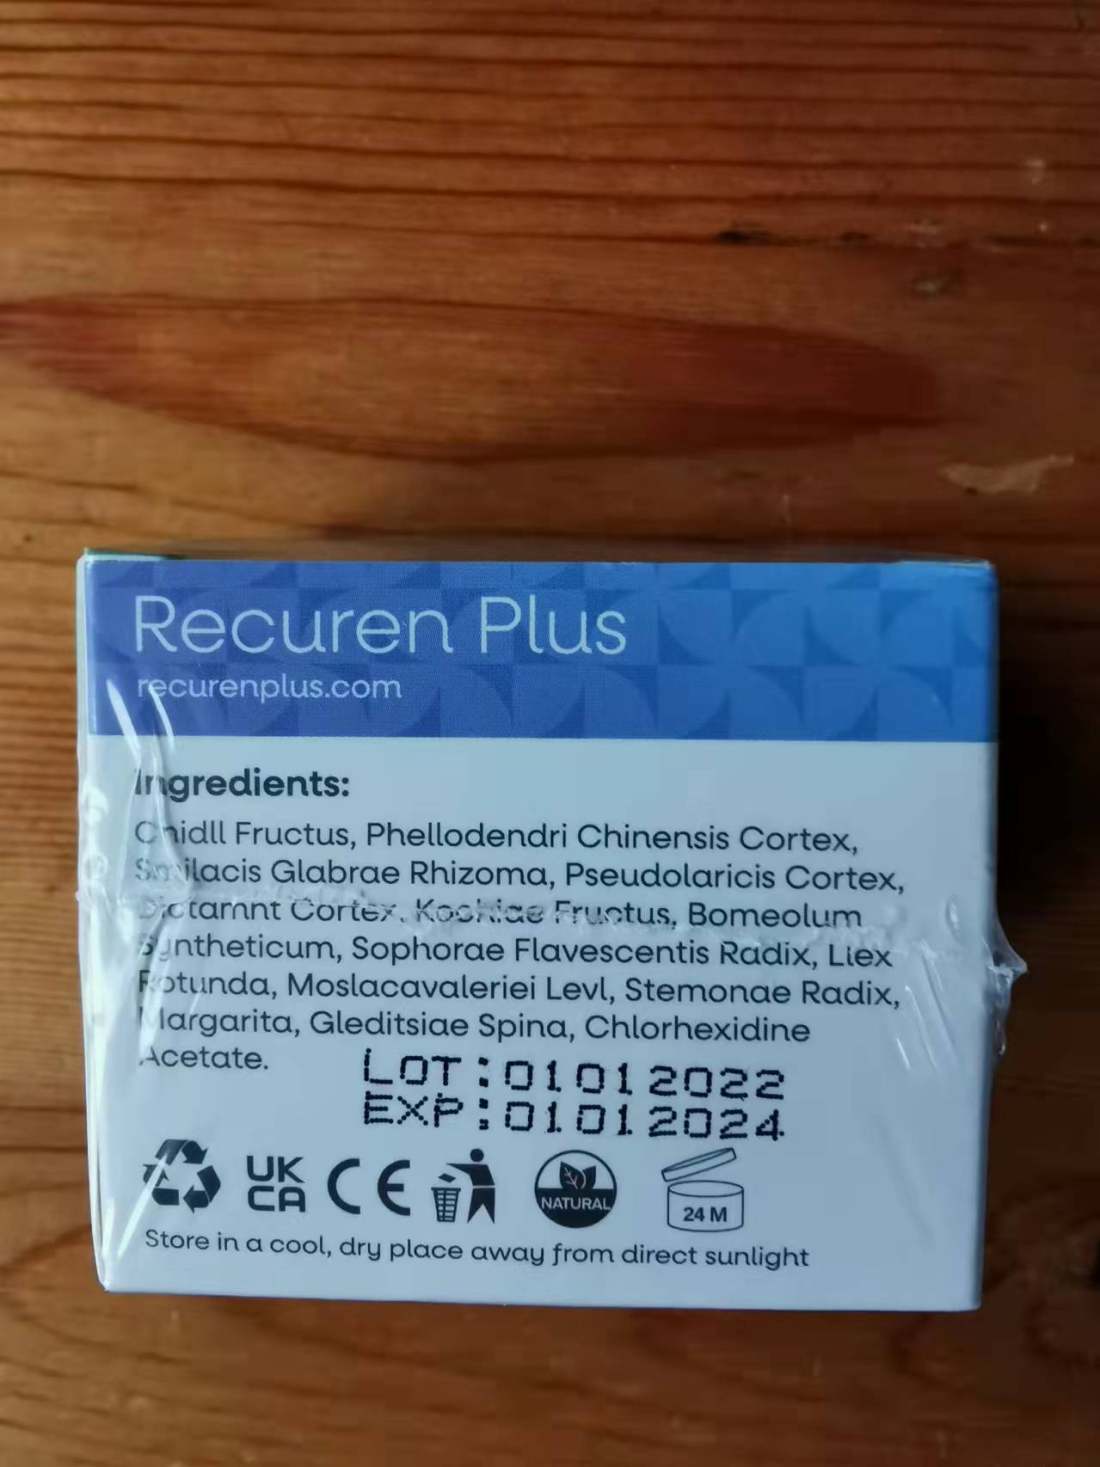 Recuren Plus Healing Max Cream （brand new）